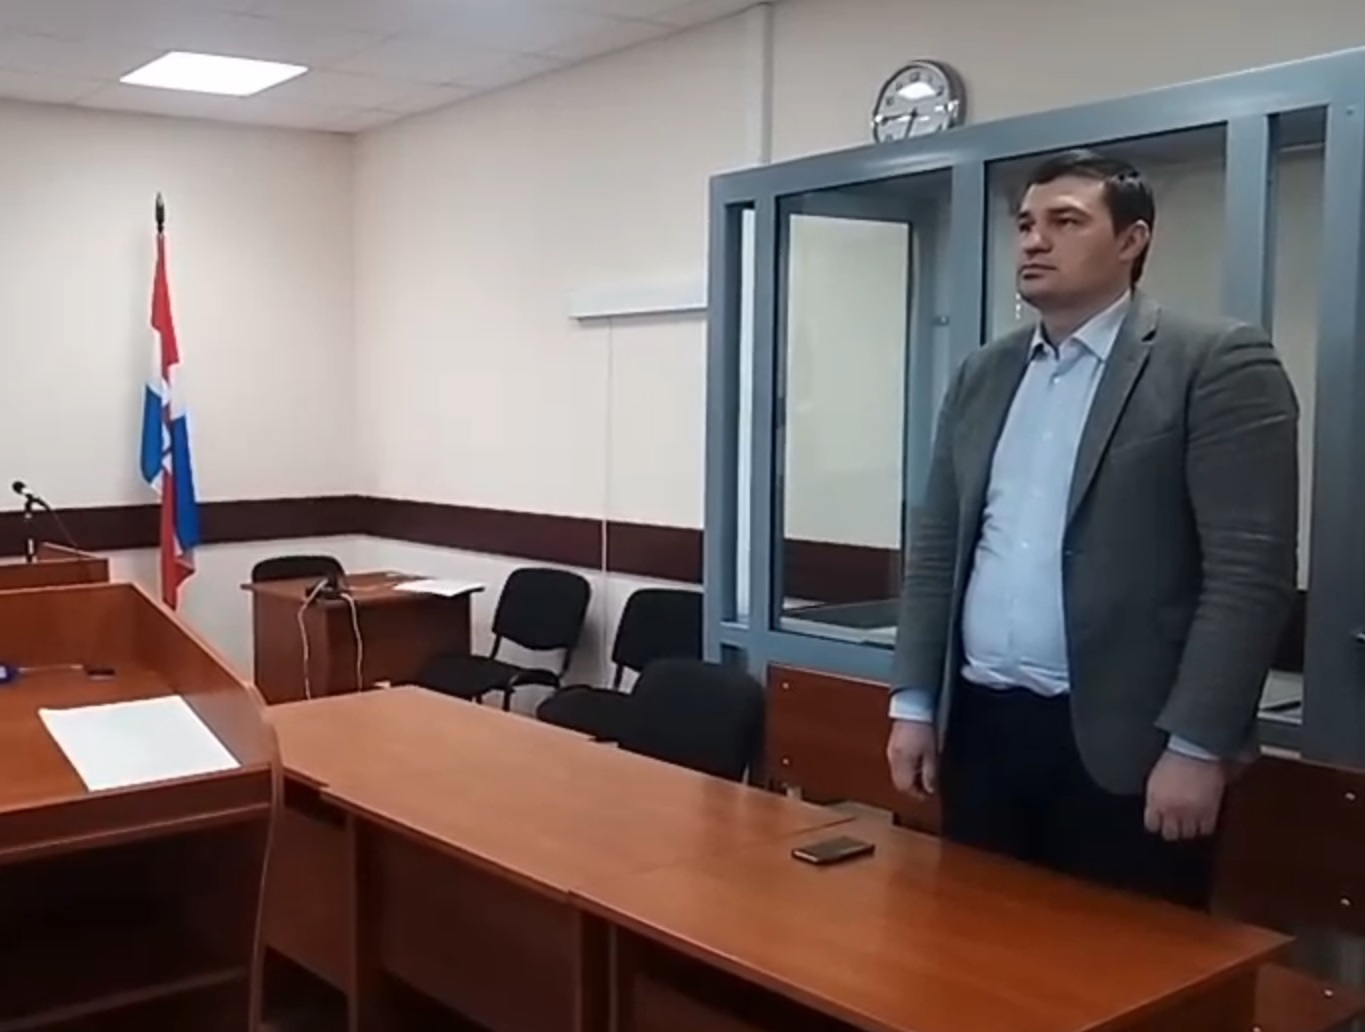 Экс-депутат краевого парламента Александр Телепнев обжалует приговор по второму уголовному делу об избиении